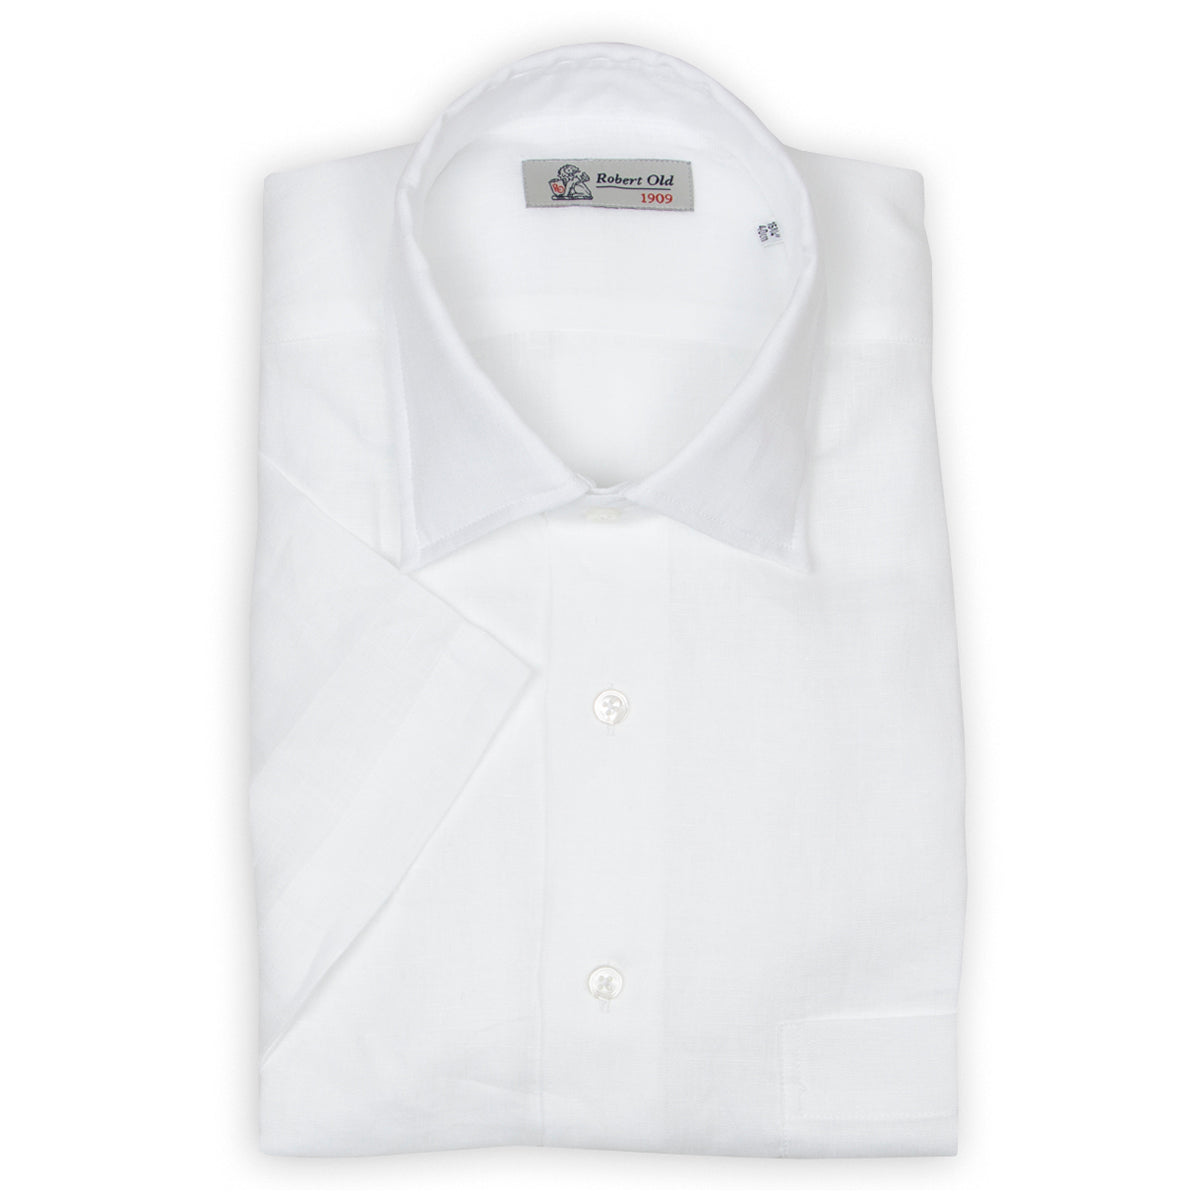 White Linen Short Sleeve Shirt  Robert Old   